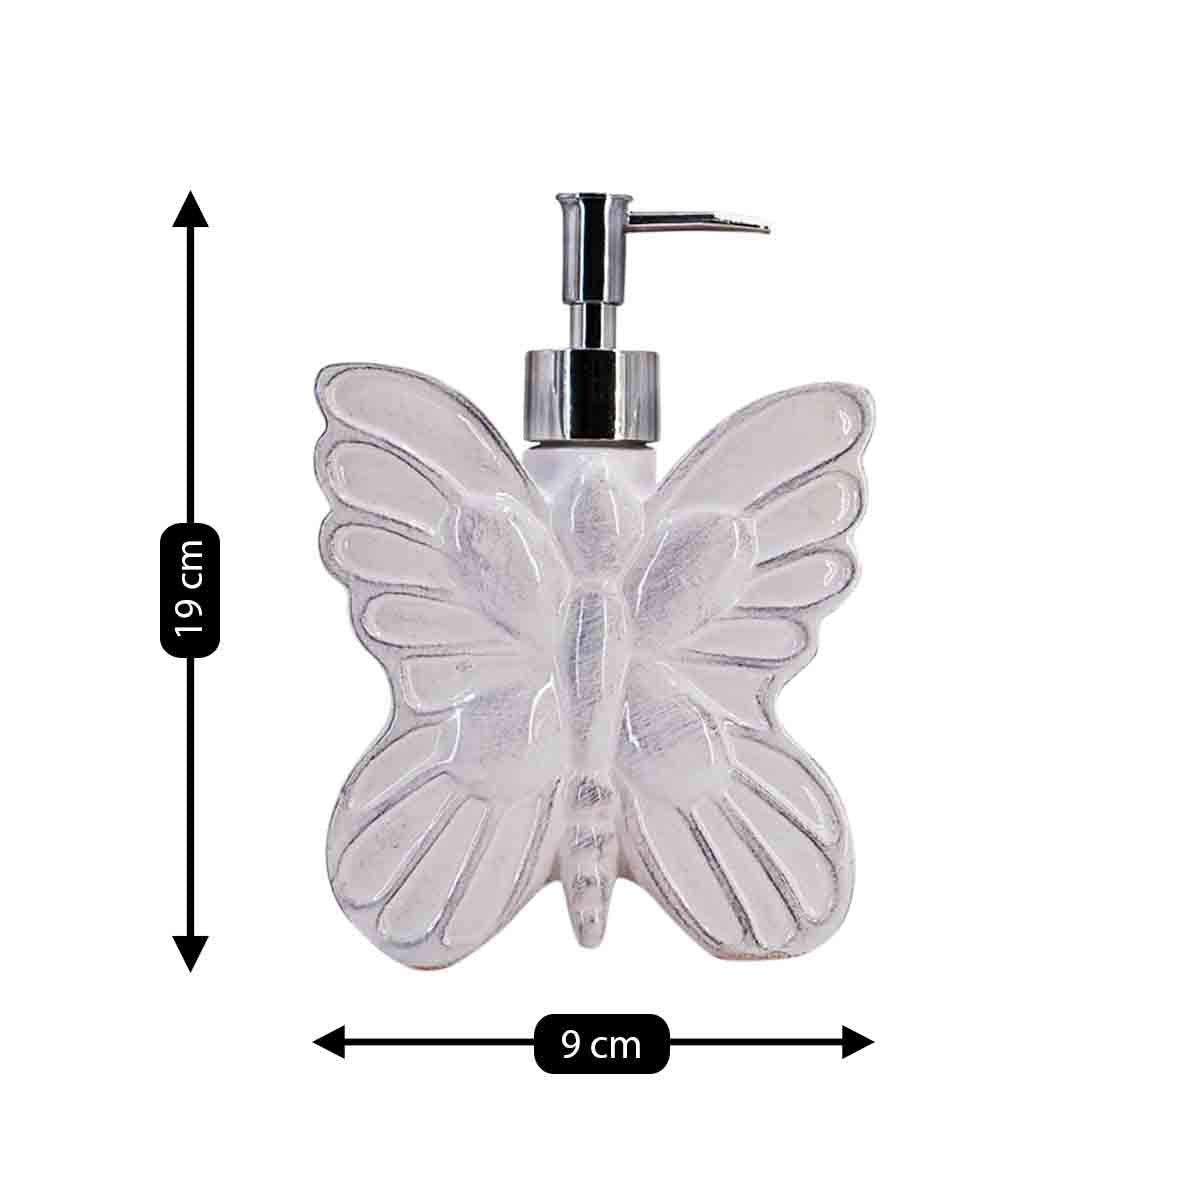 Ceramic Soap Dispenser handwash Pump for Bathroom, Set of 1, White (7689)